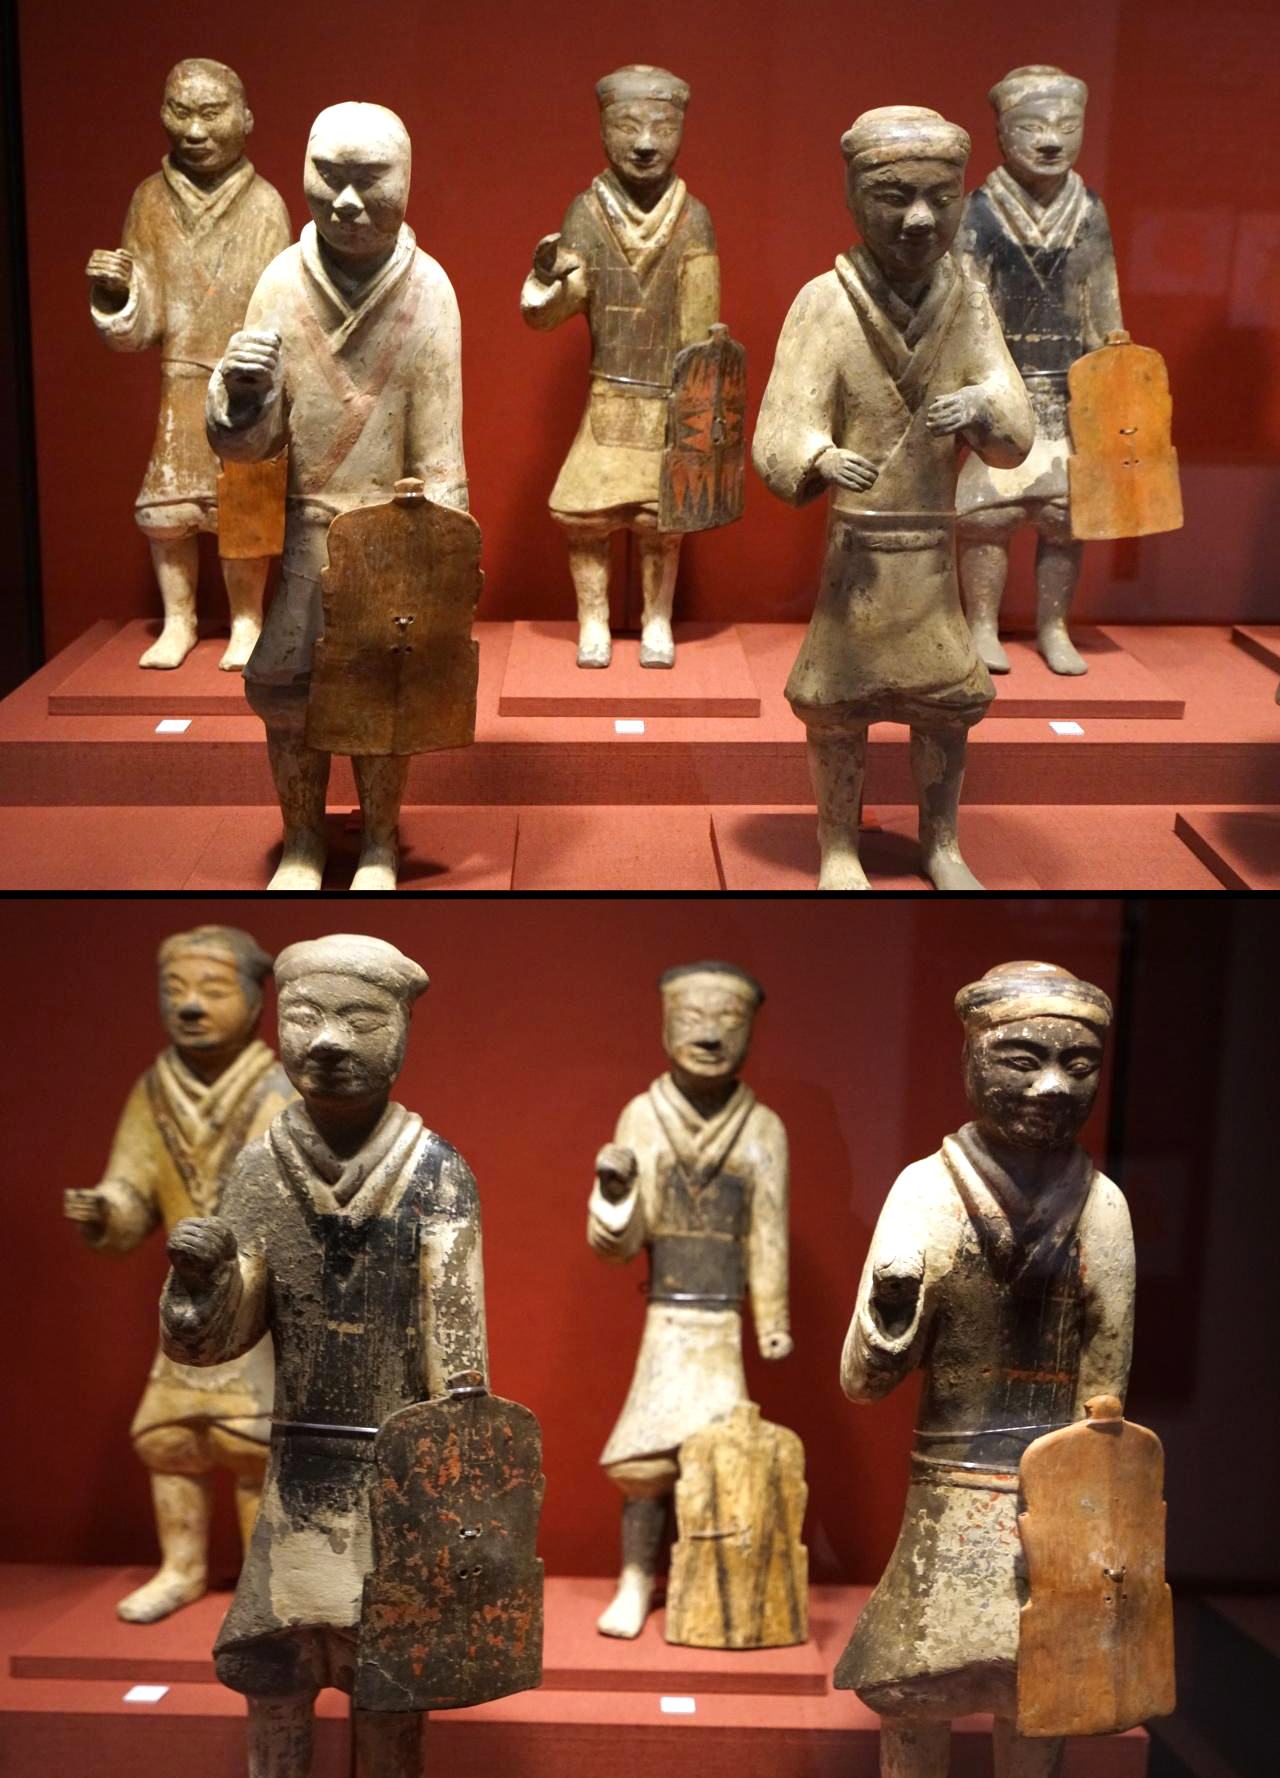 Historical Artifacts - Ceramic soldier figurines. China, Western Han dynasty, 3rd-2nd century BC u/MunakataSennin